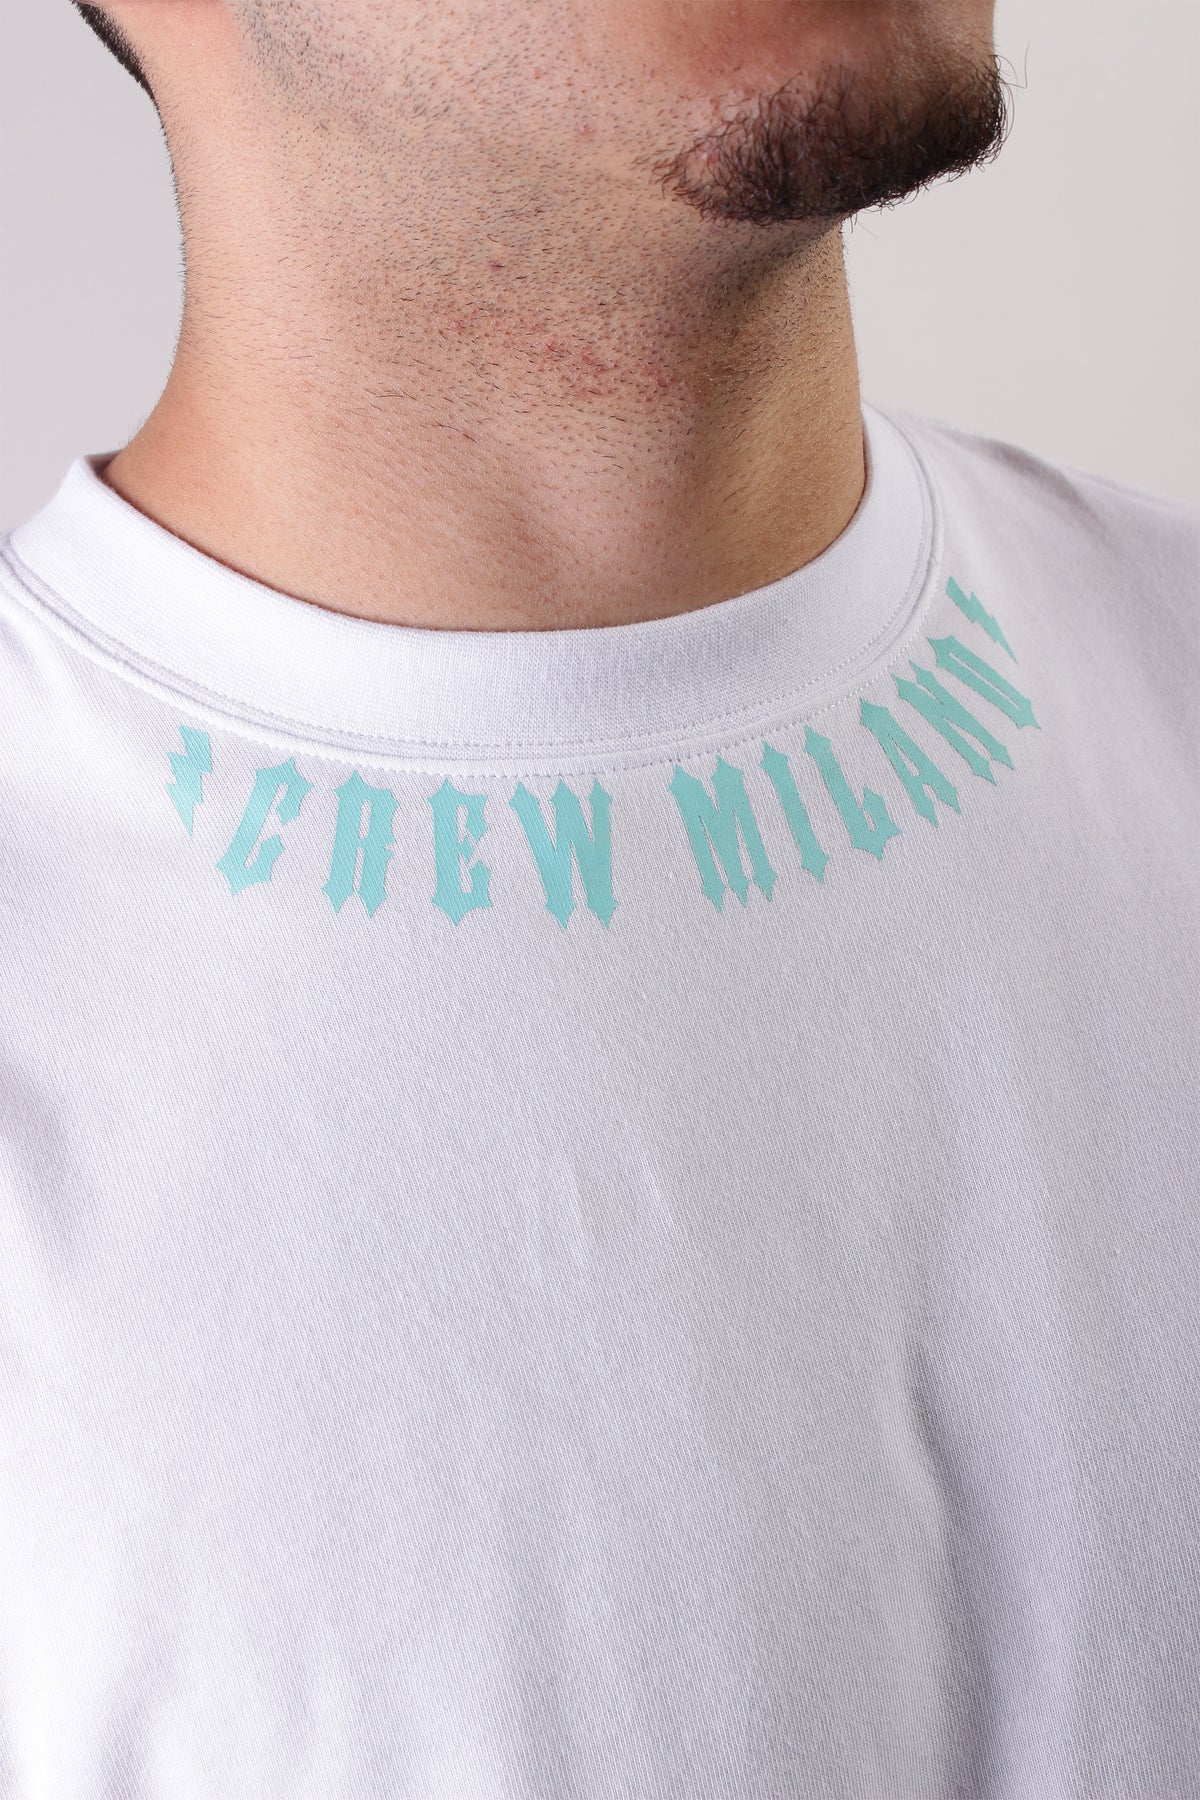 CREW Milano DUBAI White/Mint T-Shirt